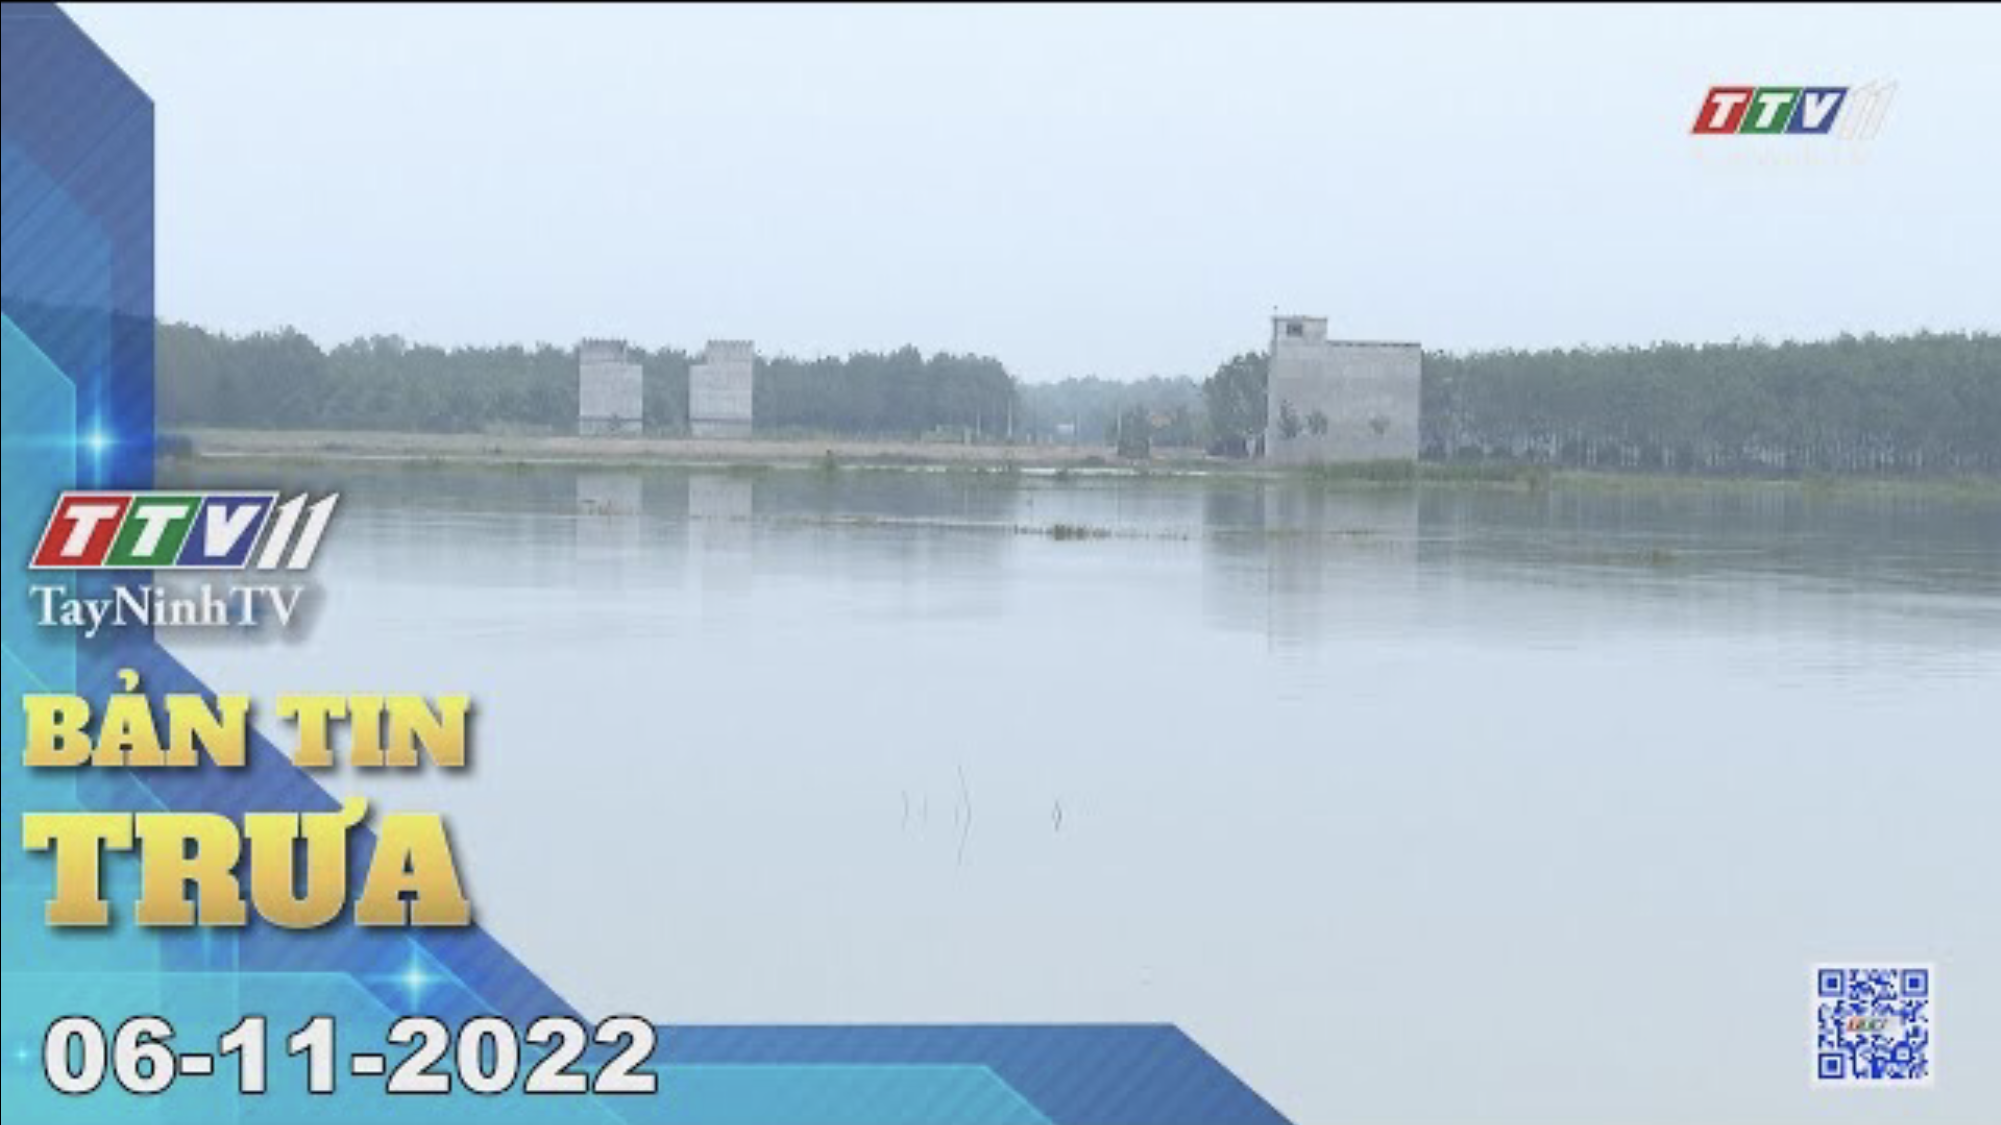 Bản tin trưa 06-11-2022 | Tin tức hôm nay | TayNinhTV